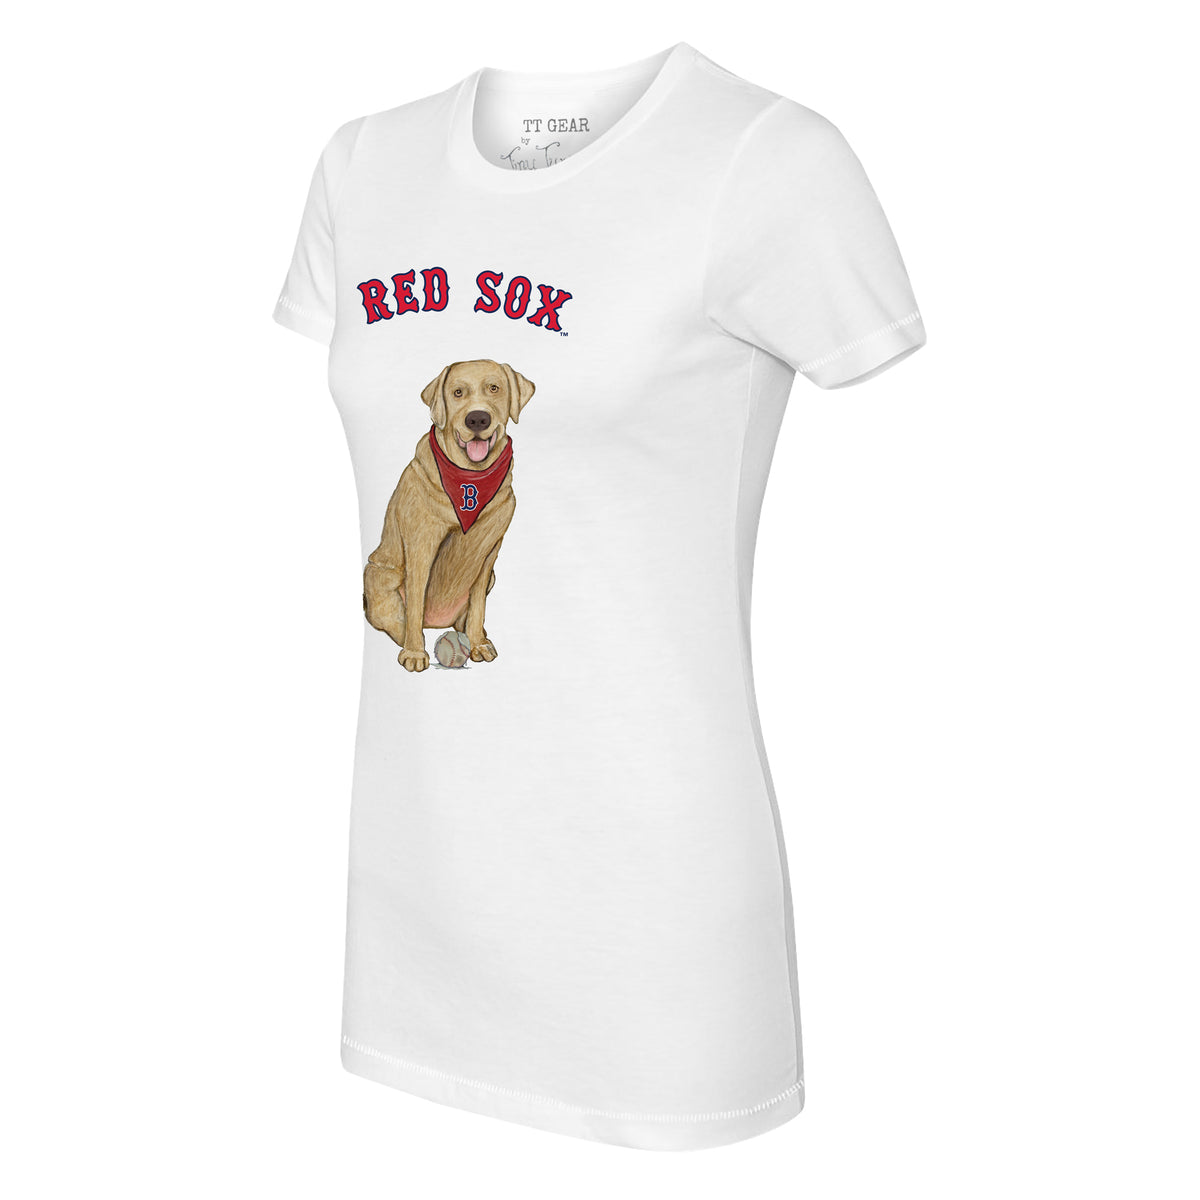 Boston Red Sox Yellow Labrador Retriever Tee Shirt